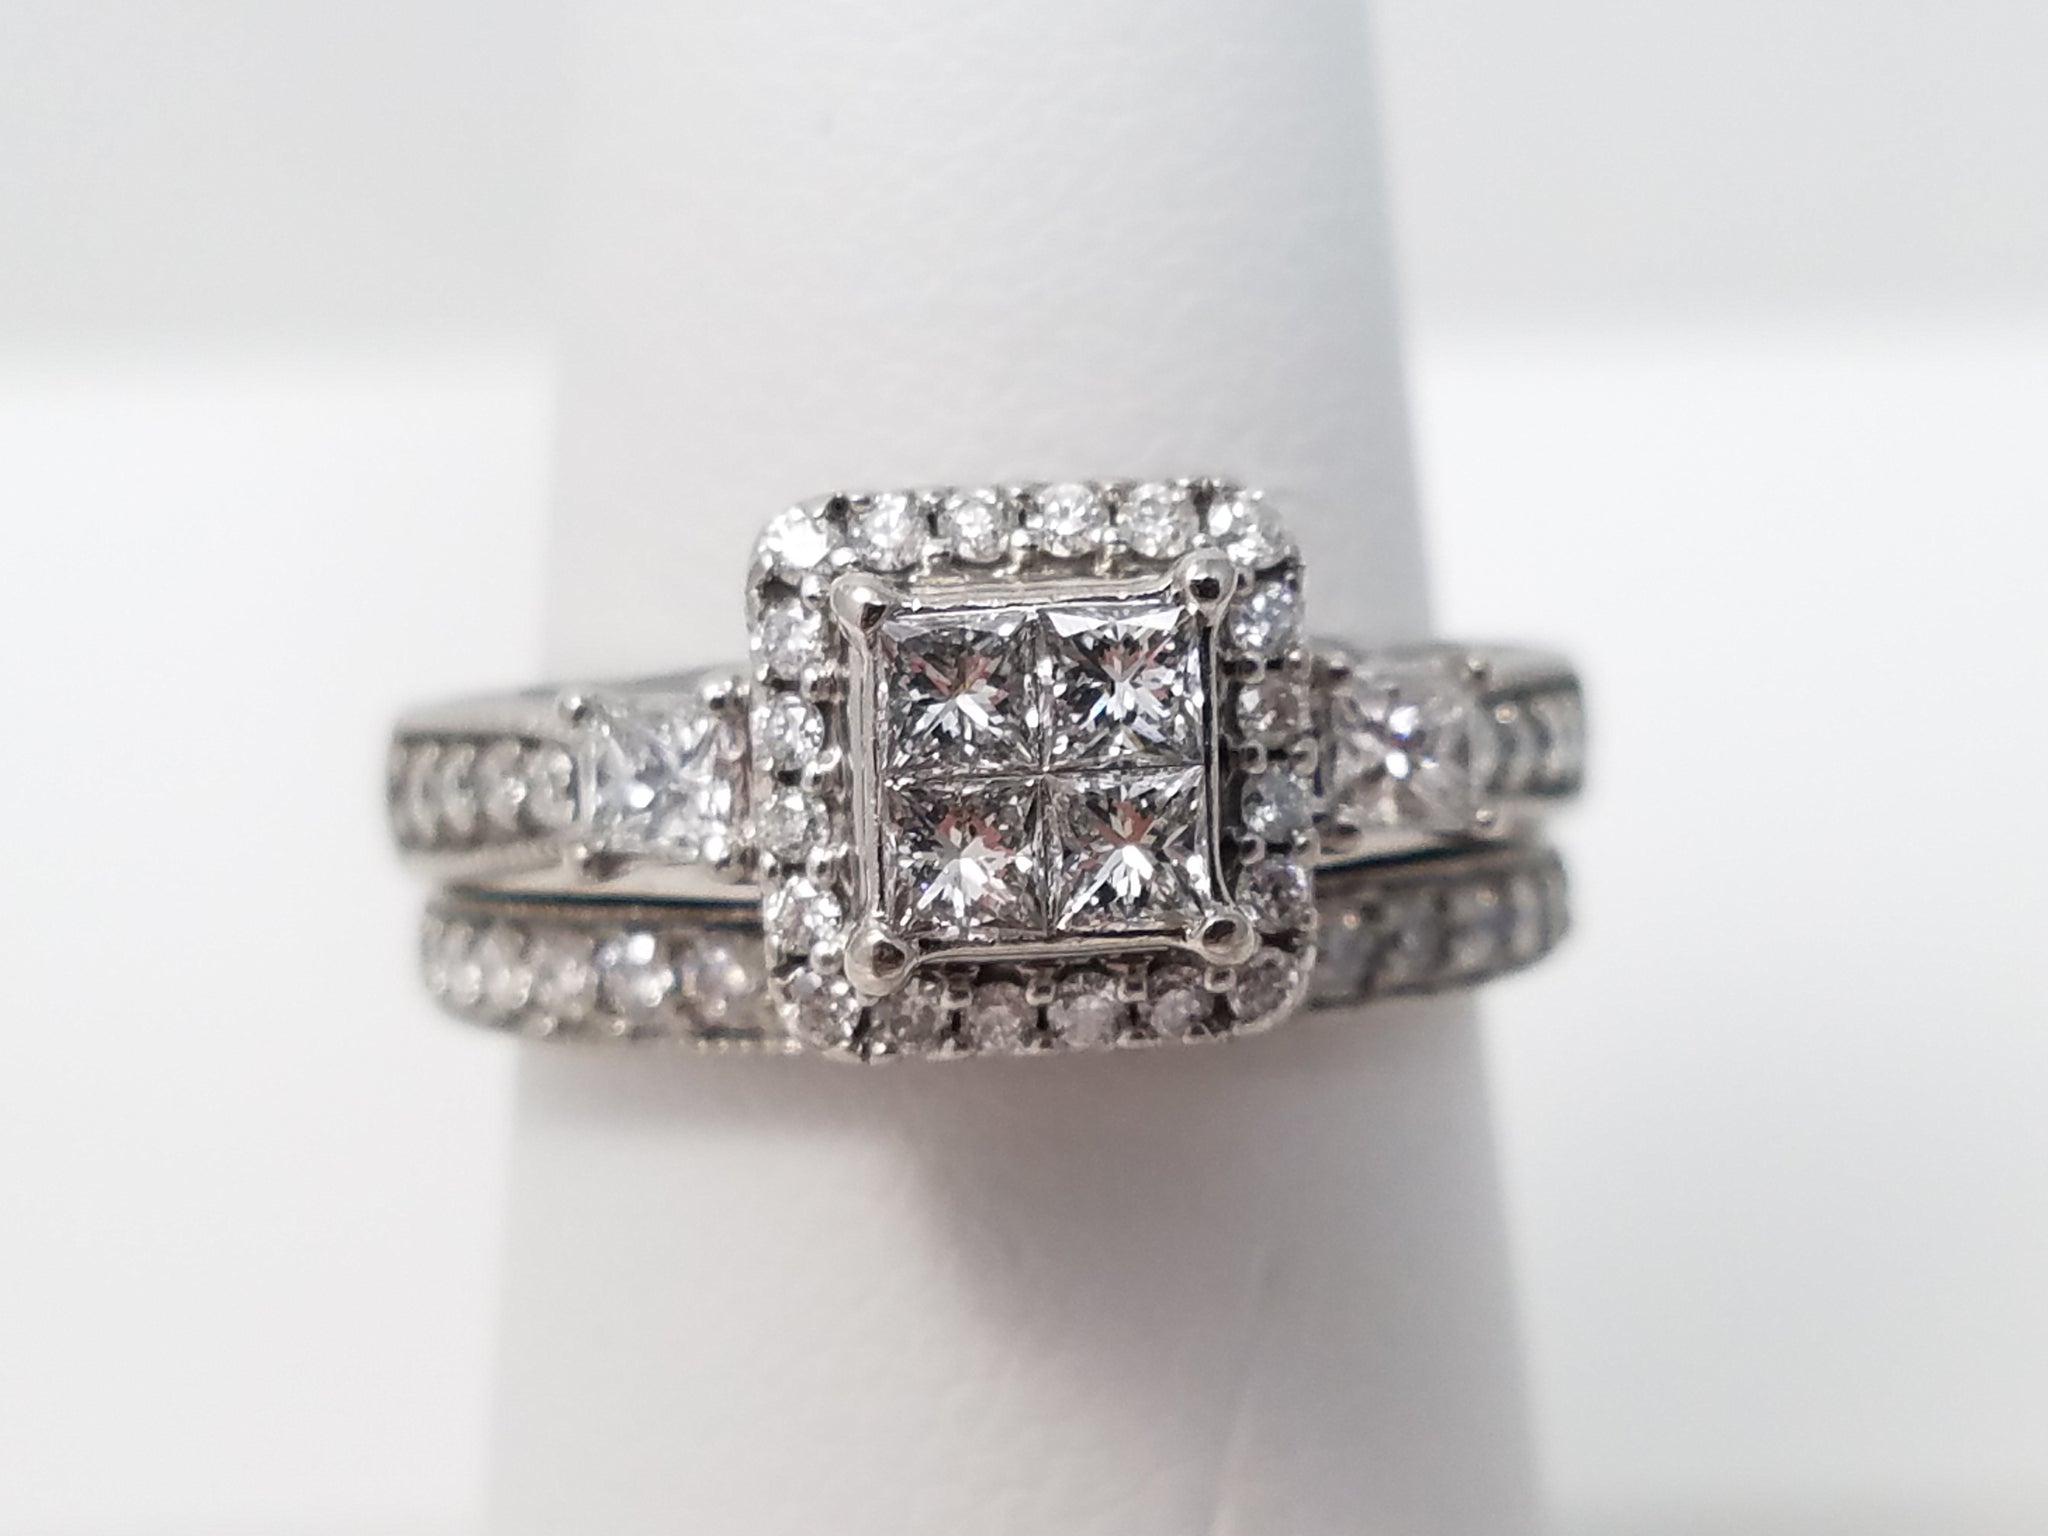 1ctw Natural Diamond 10k White Gold Engagement Ring Set